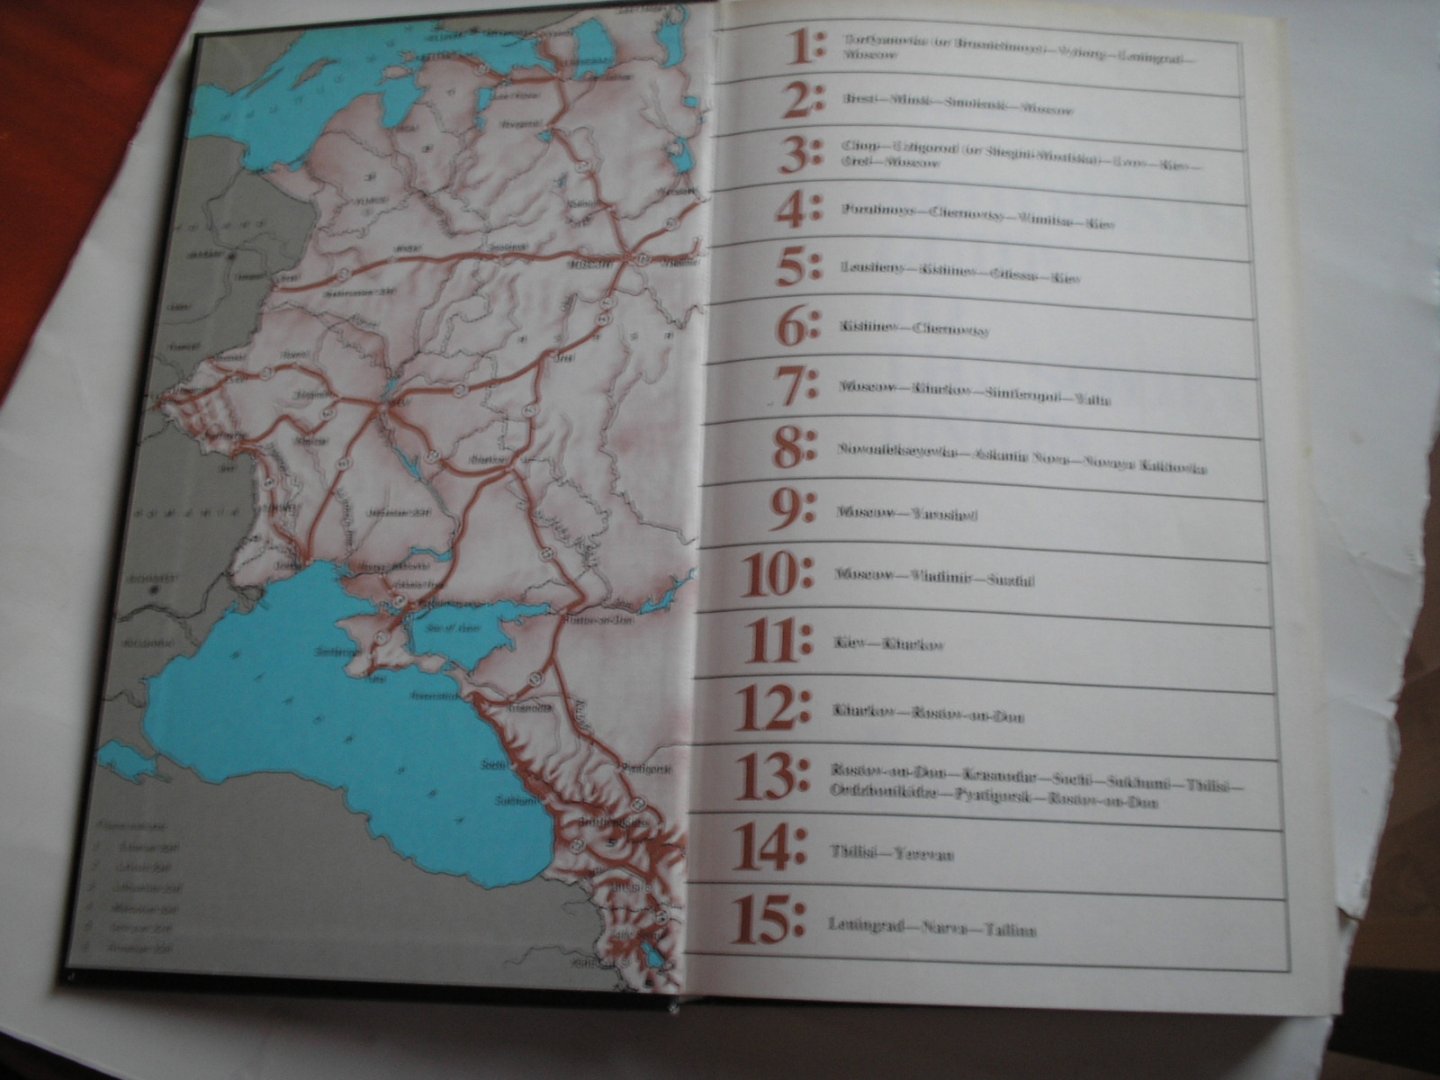 Zadvorny, Leonid - Motorists' guide to the Soviet Union